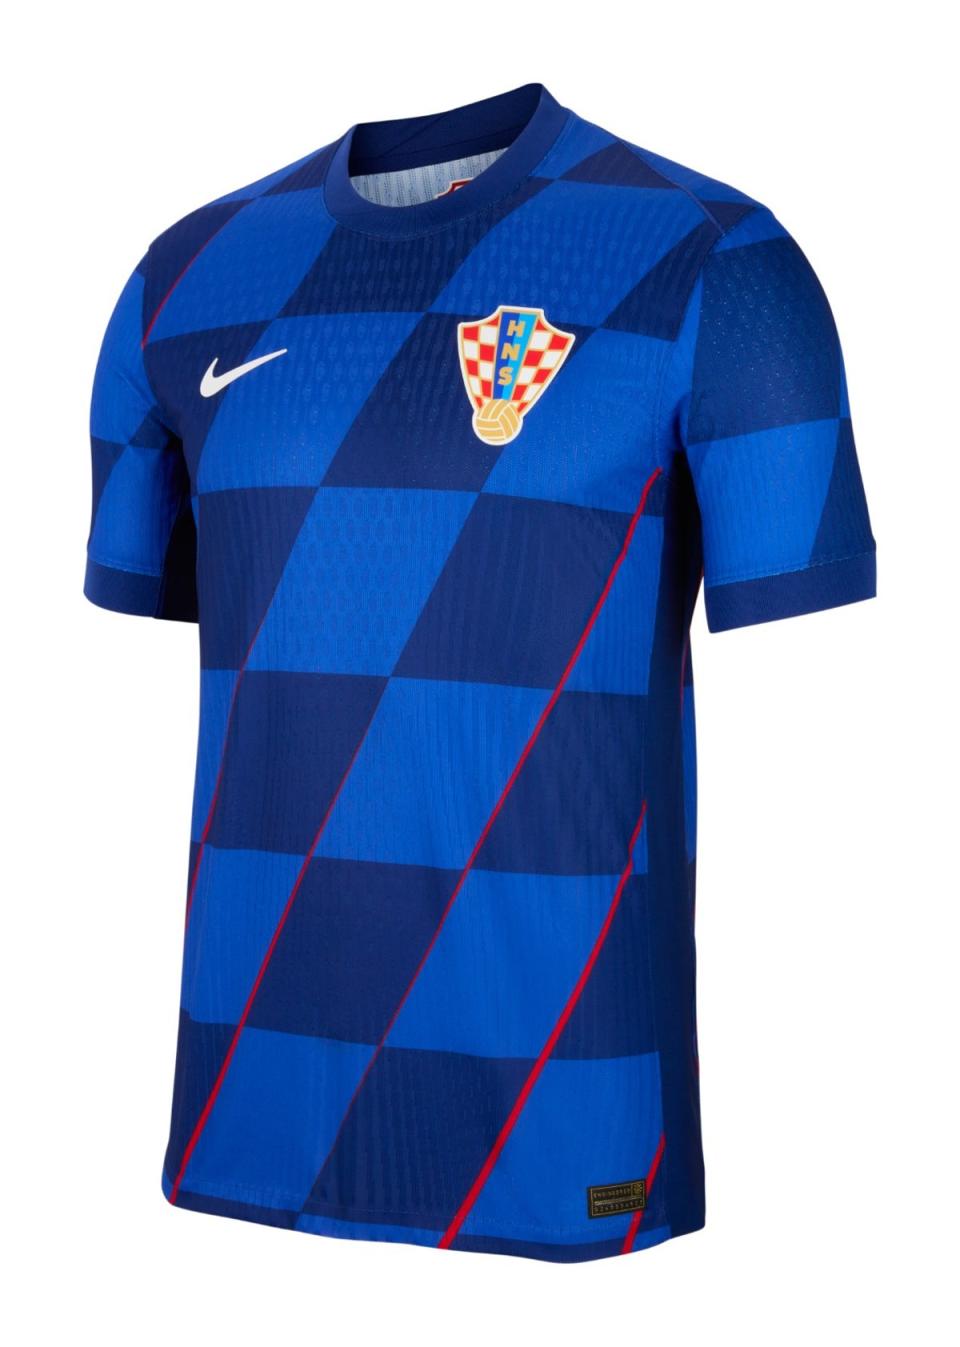 Croatia away (Nike)